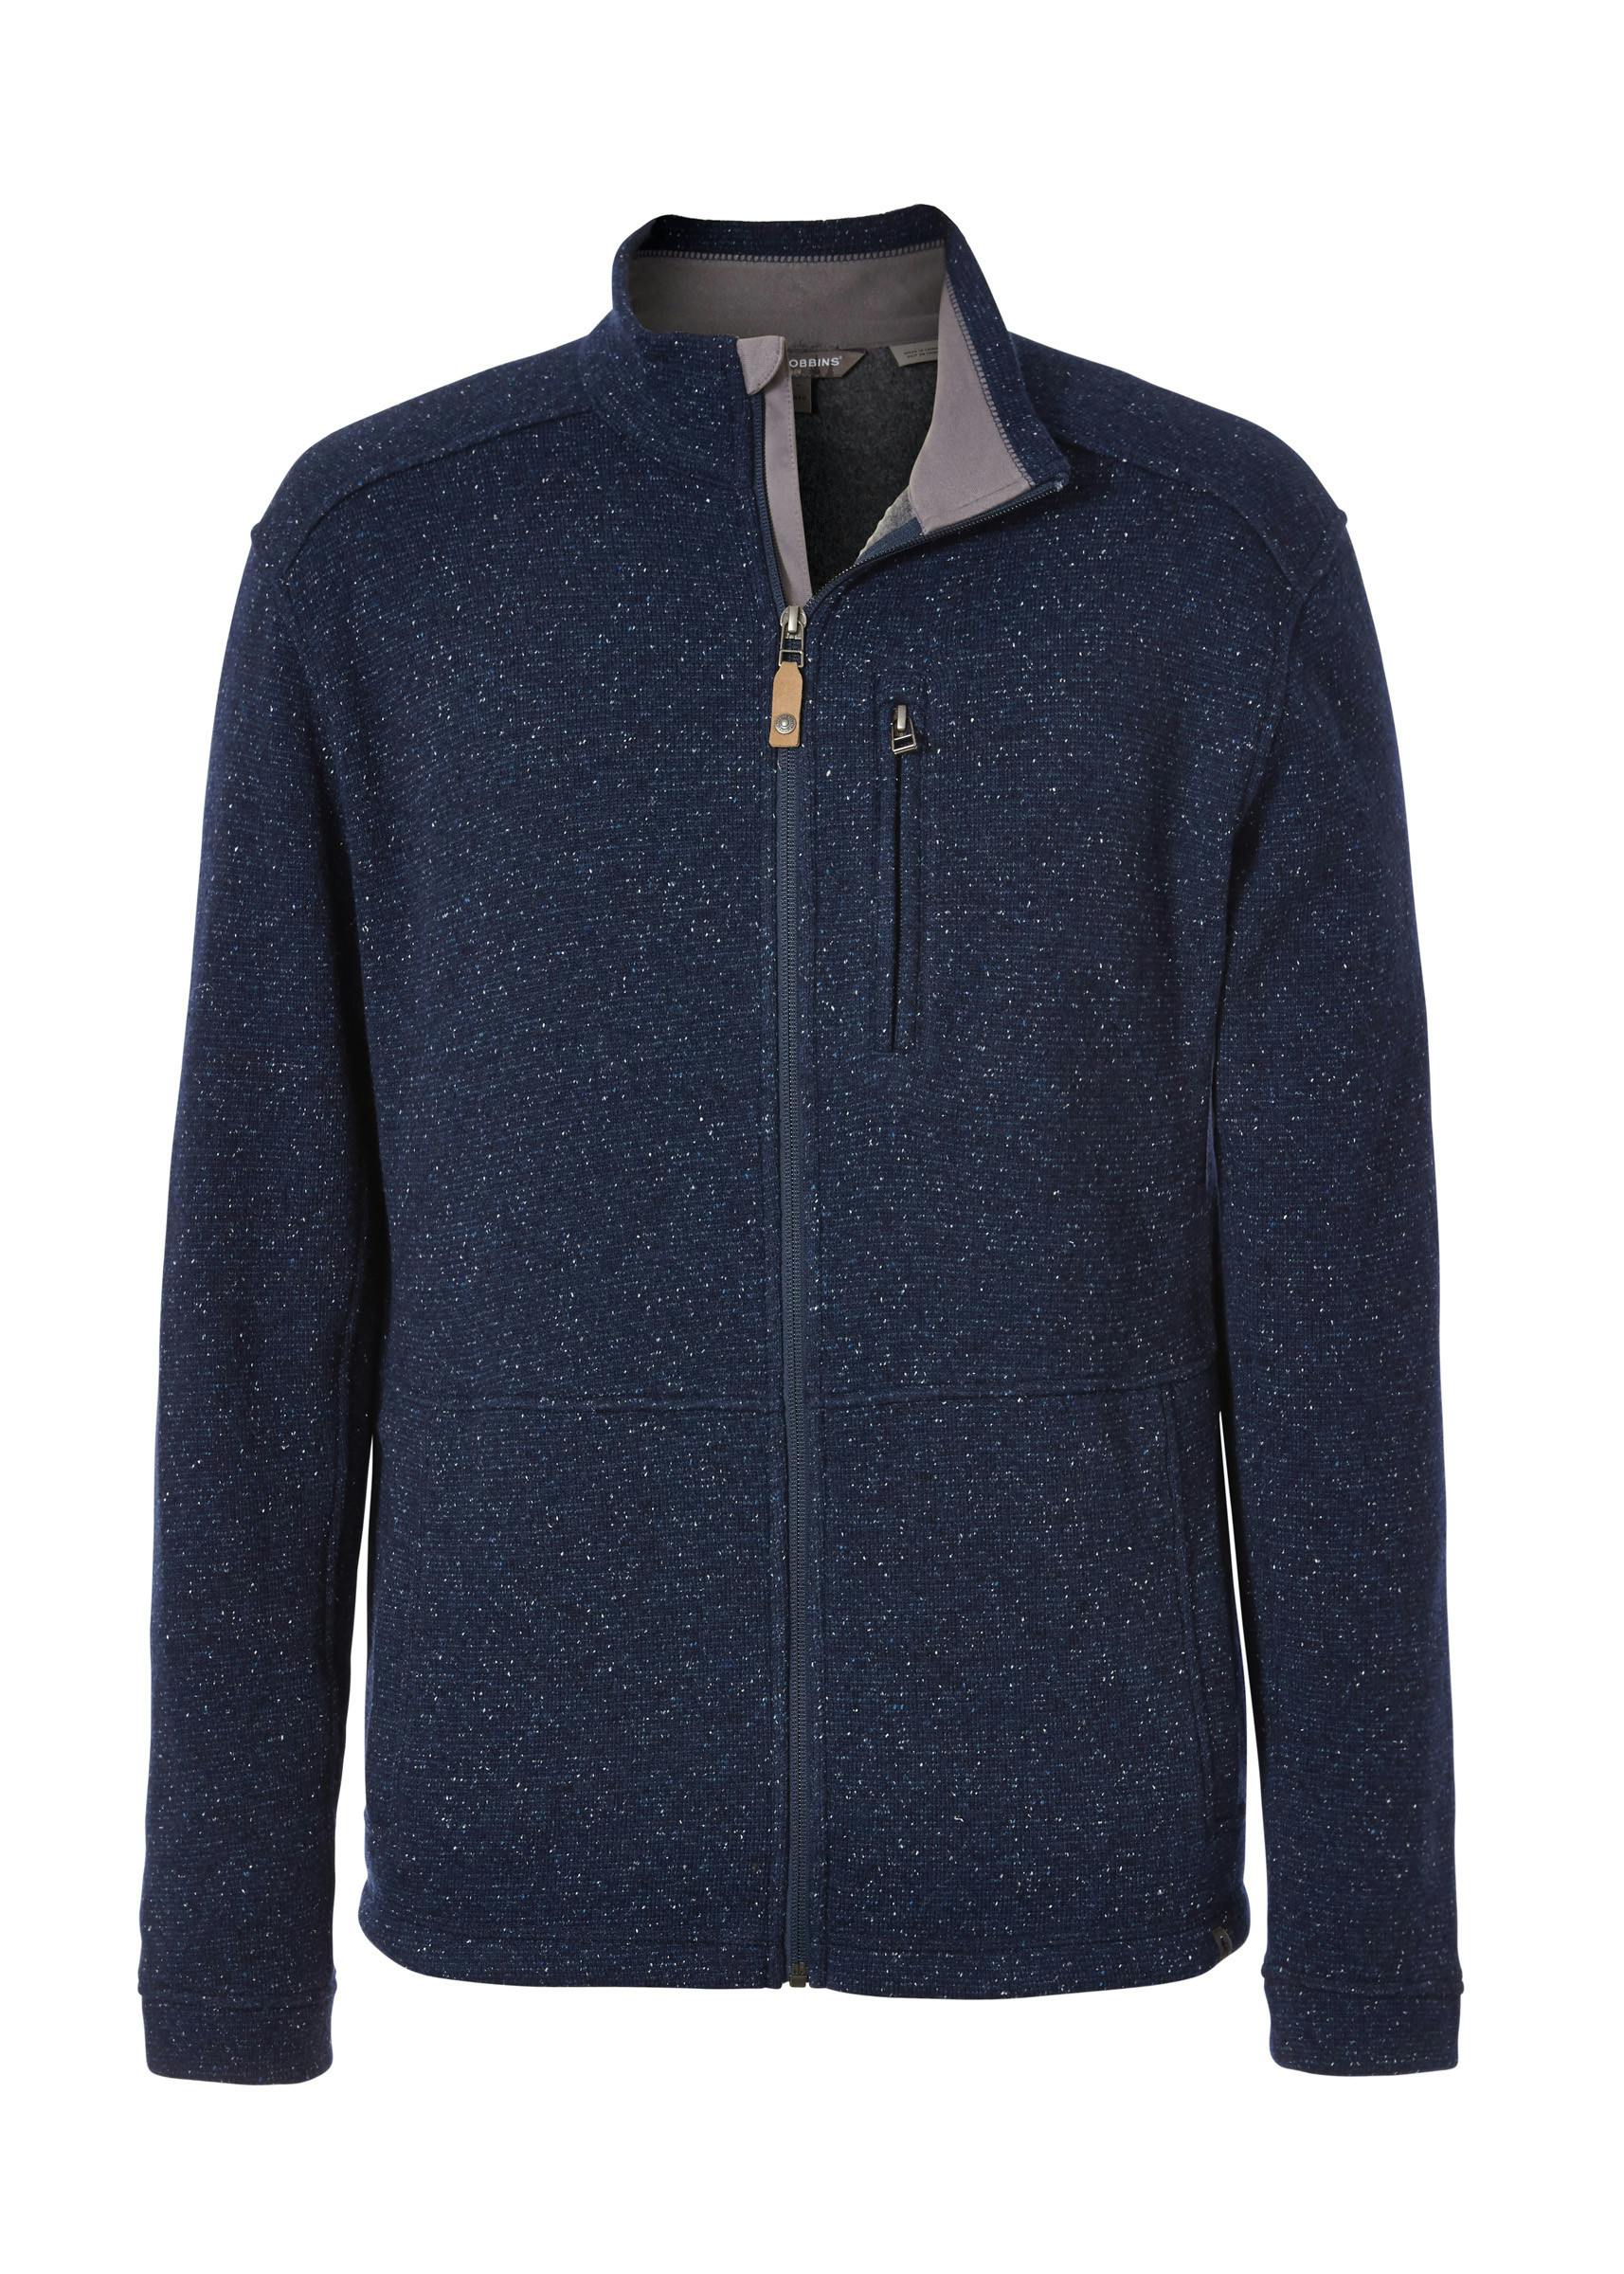 Royal Robbins - Men's Dolomites Fleece Sweater Jacket